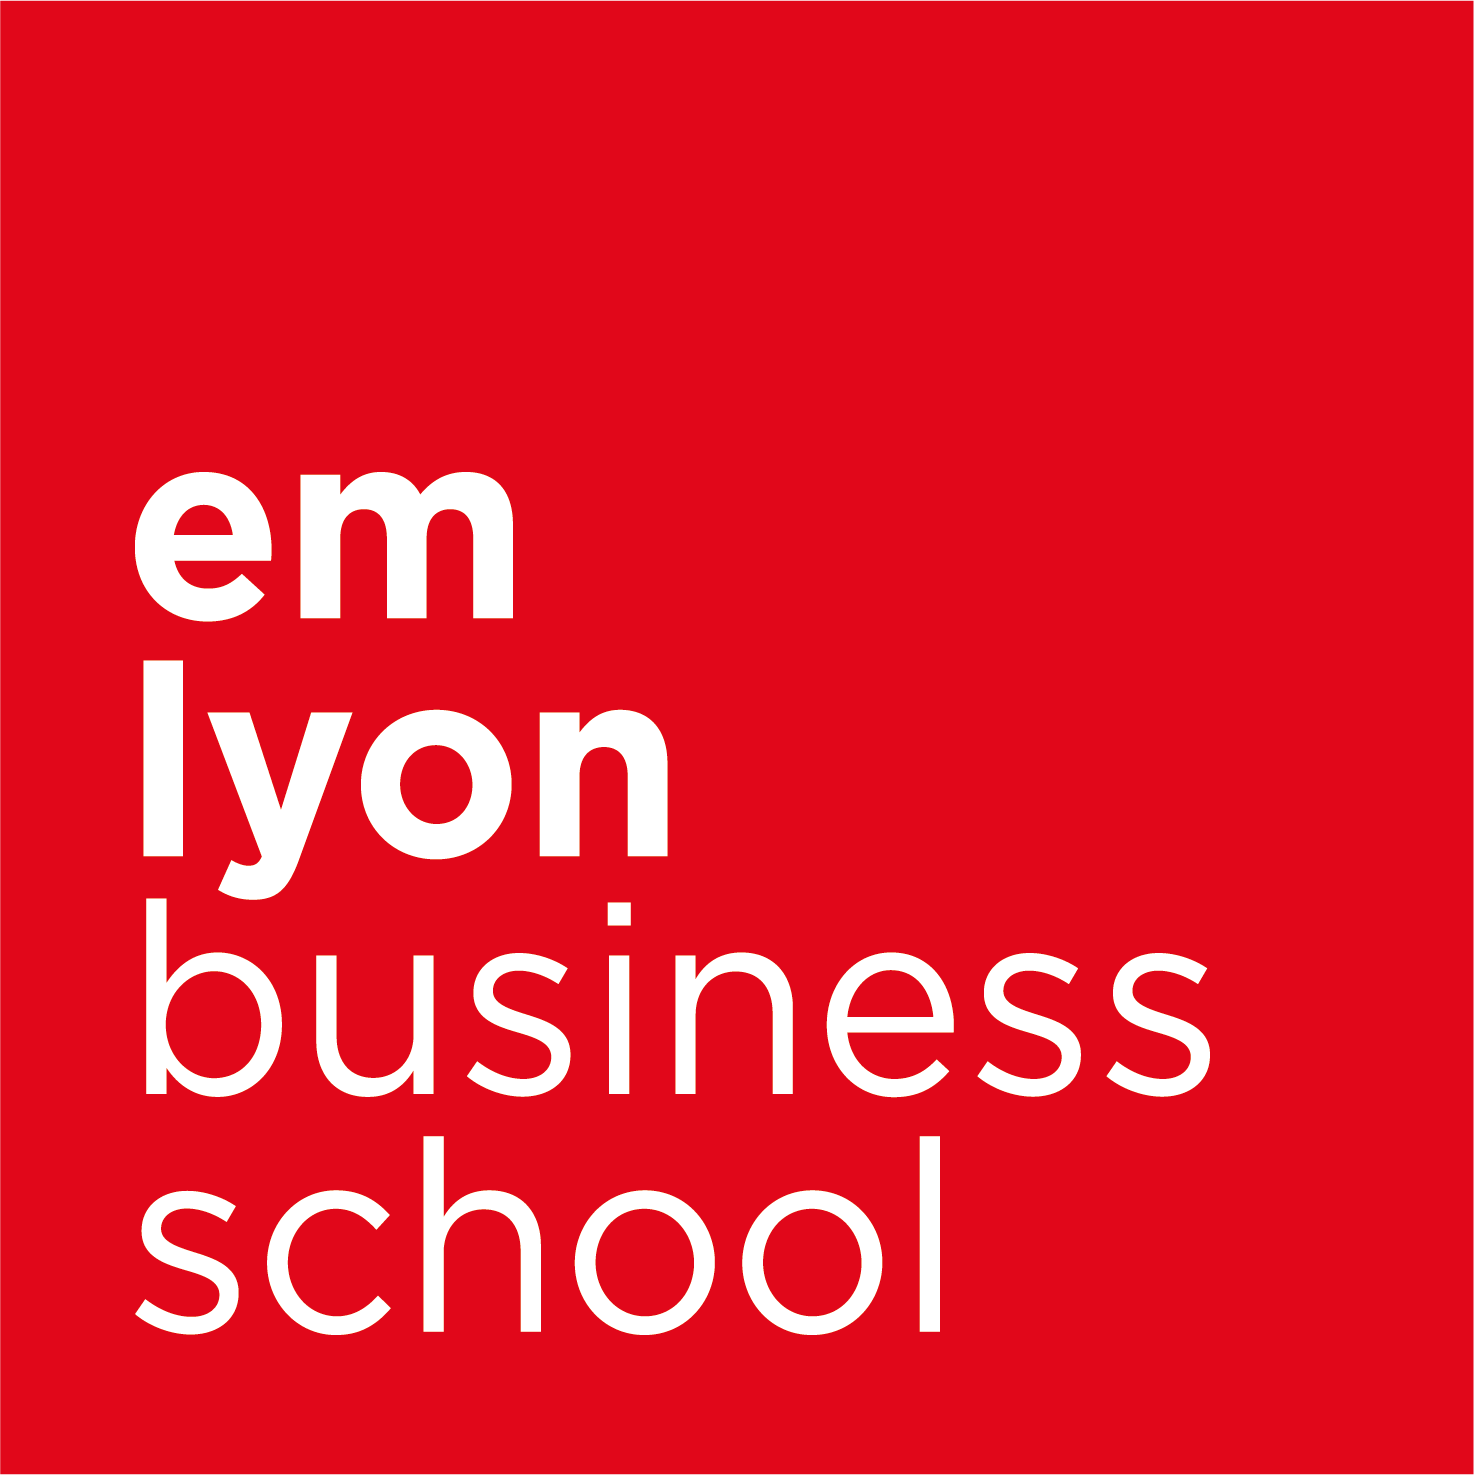 emlyon business school - executive education